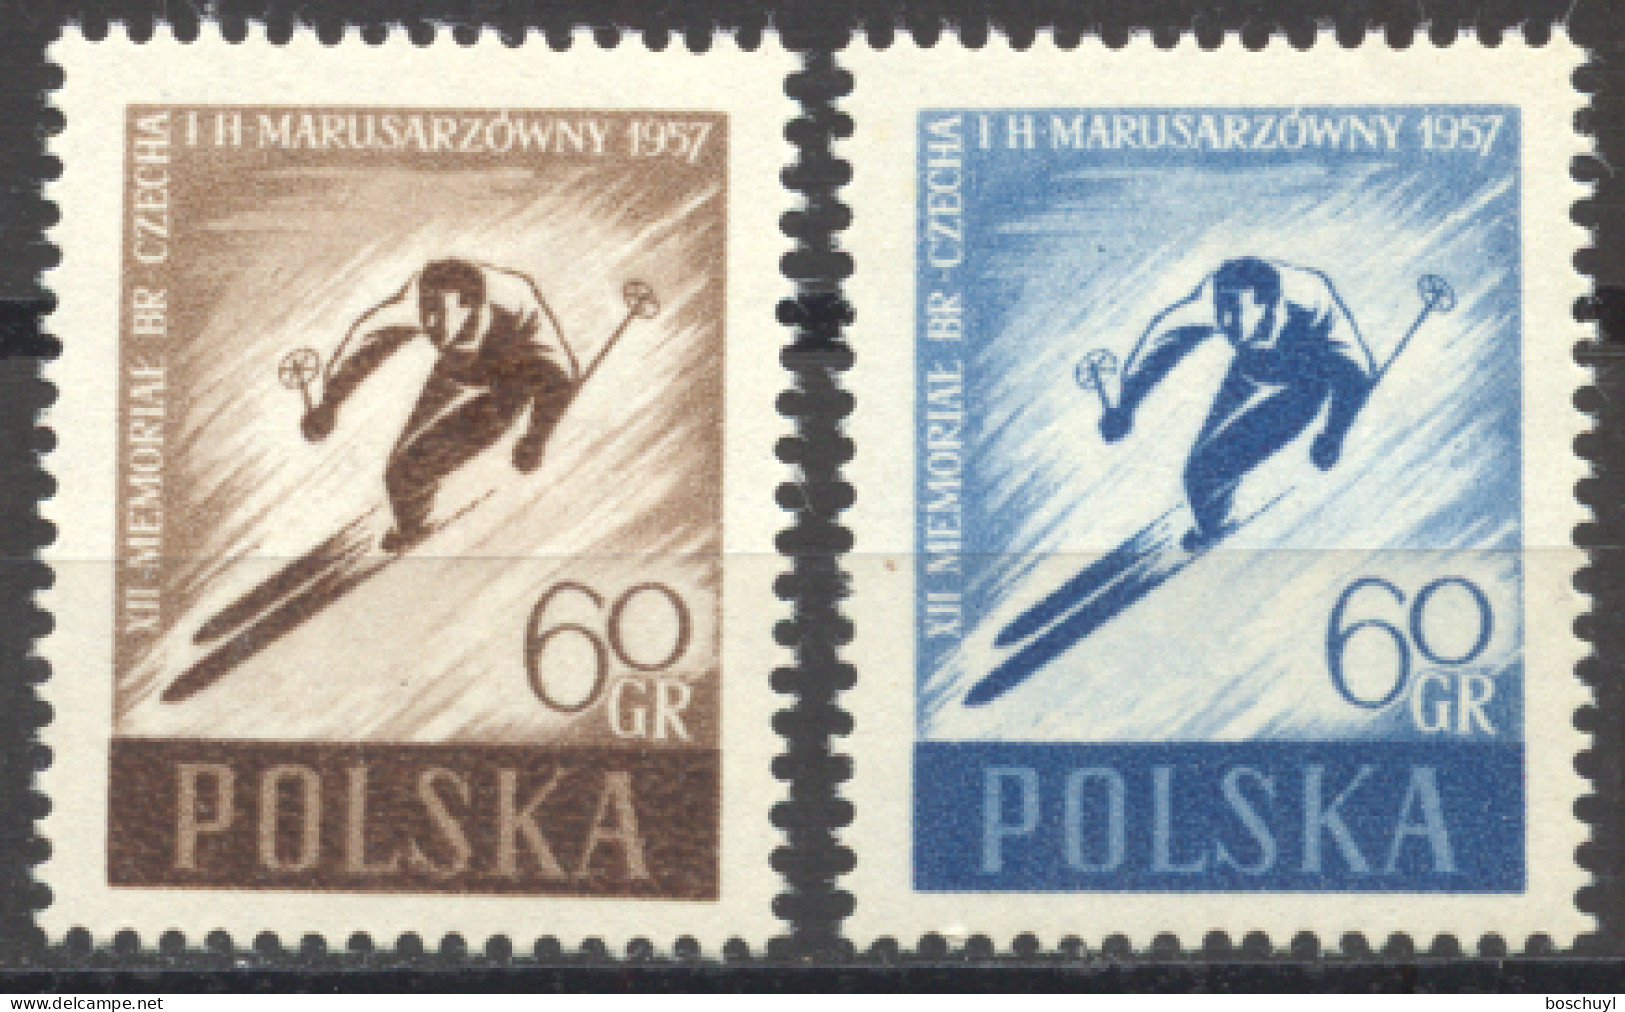 Poland, 1957, Skiing, Sports, MNH, Michel 1002-1003 - Ongebruikt